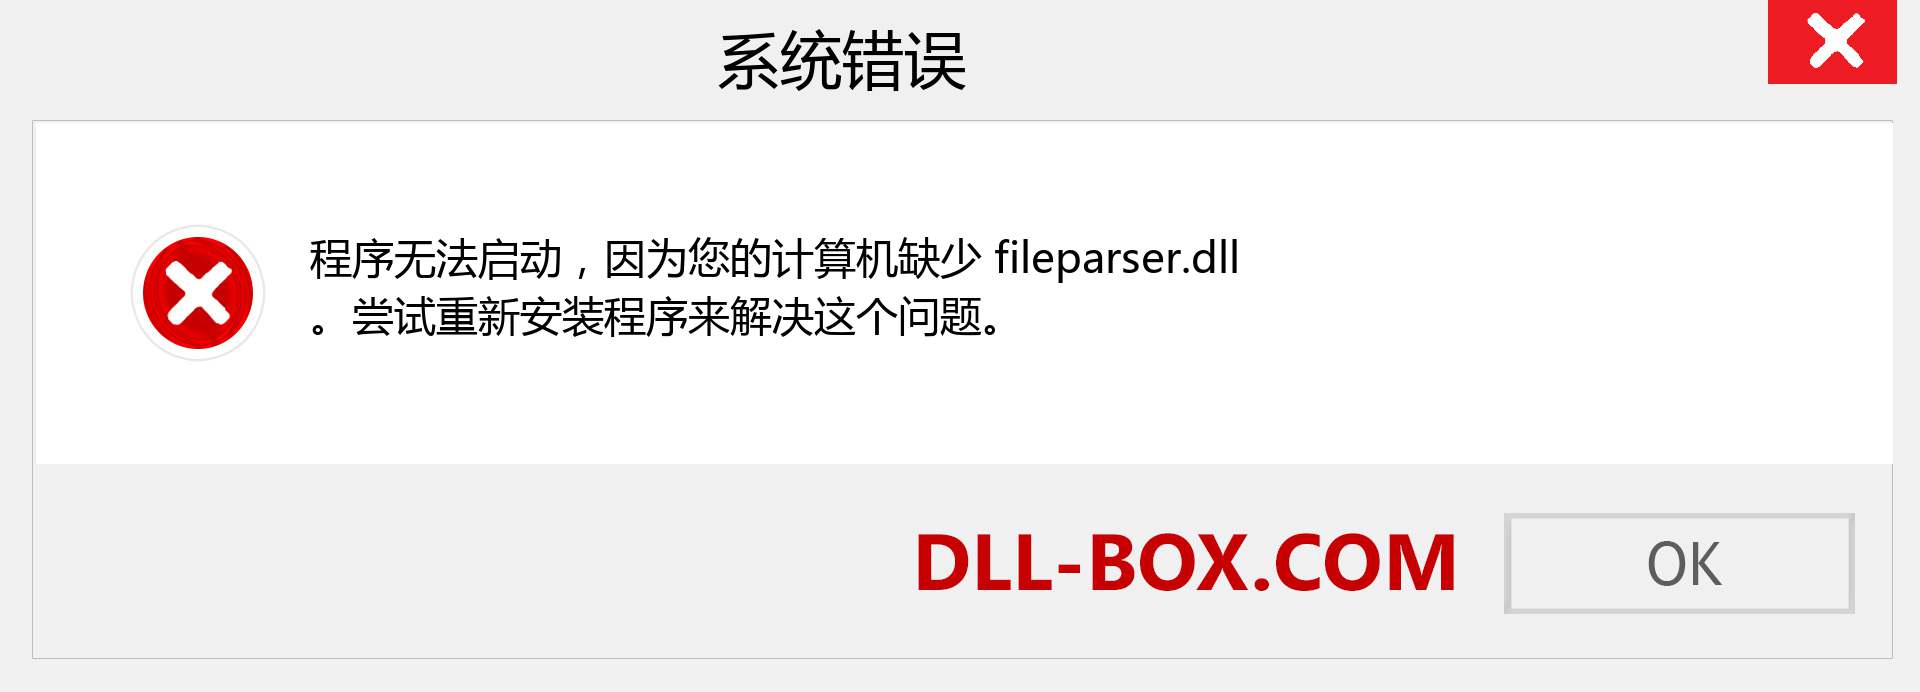 fileparser.dll 文件丢失？。 适用于 Windows 7、8、10 的下载 - 修复 Windows、照片、图像上的 fileparser dll 丢失错误